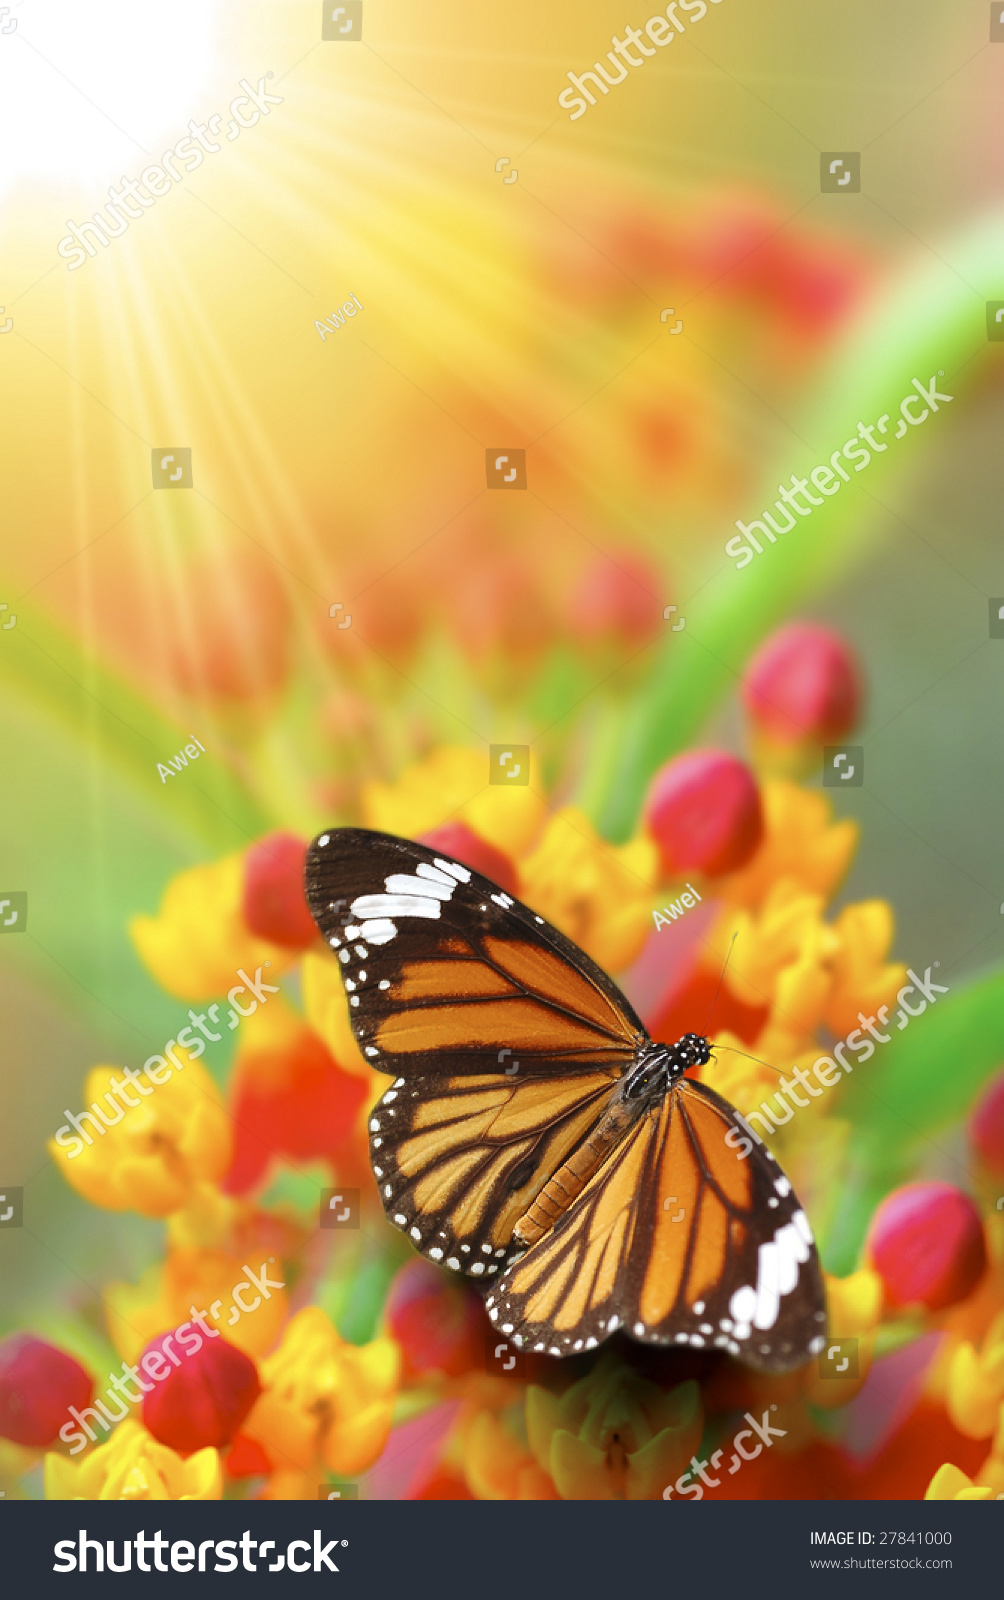 Light & Butterfly Stock Photo 27841000 : Shutterstock